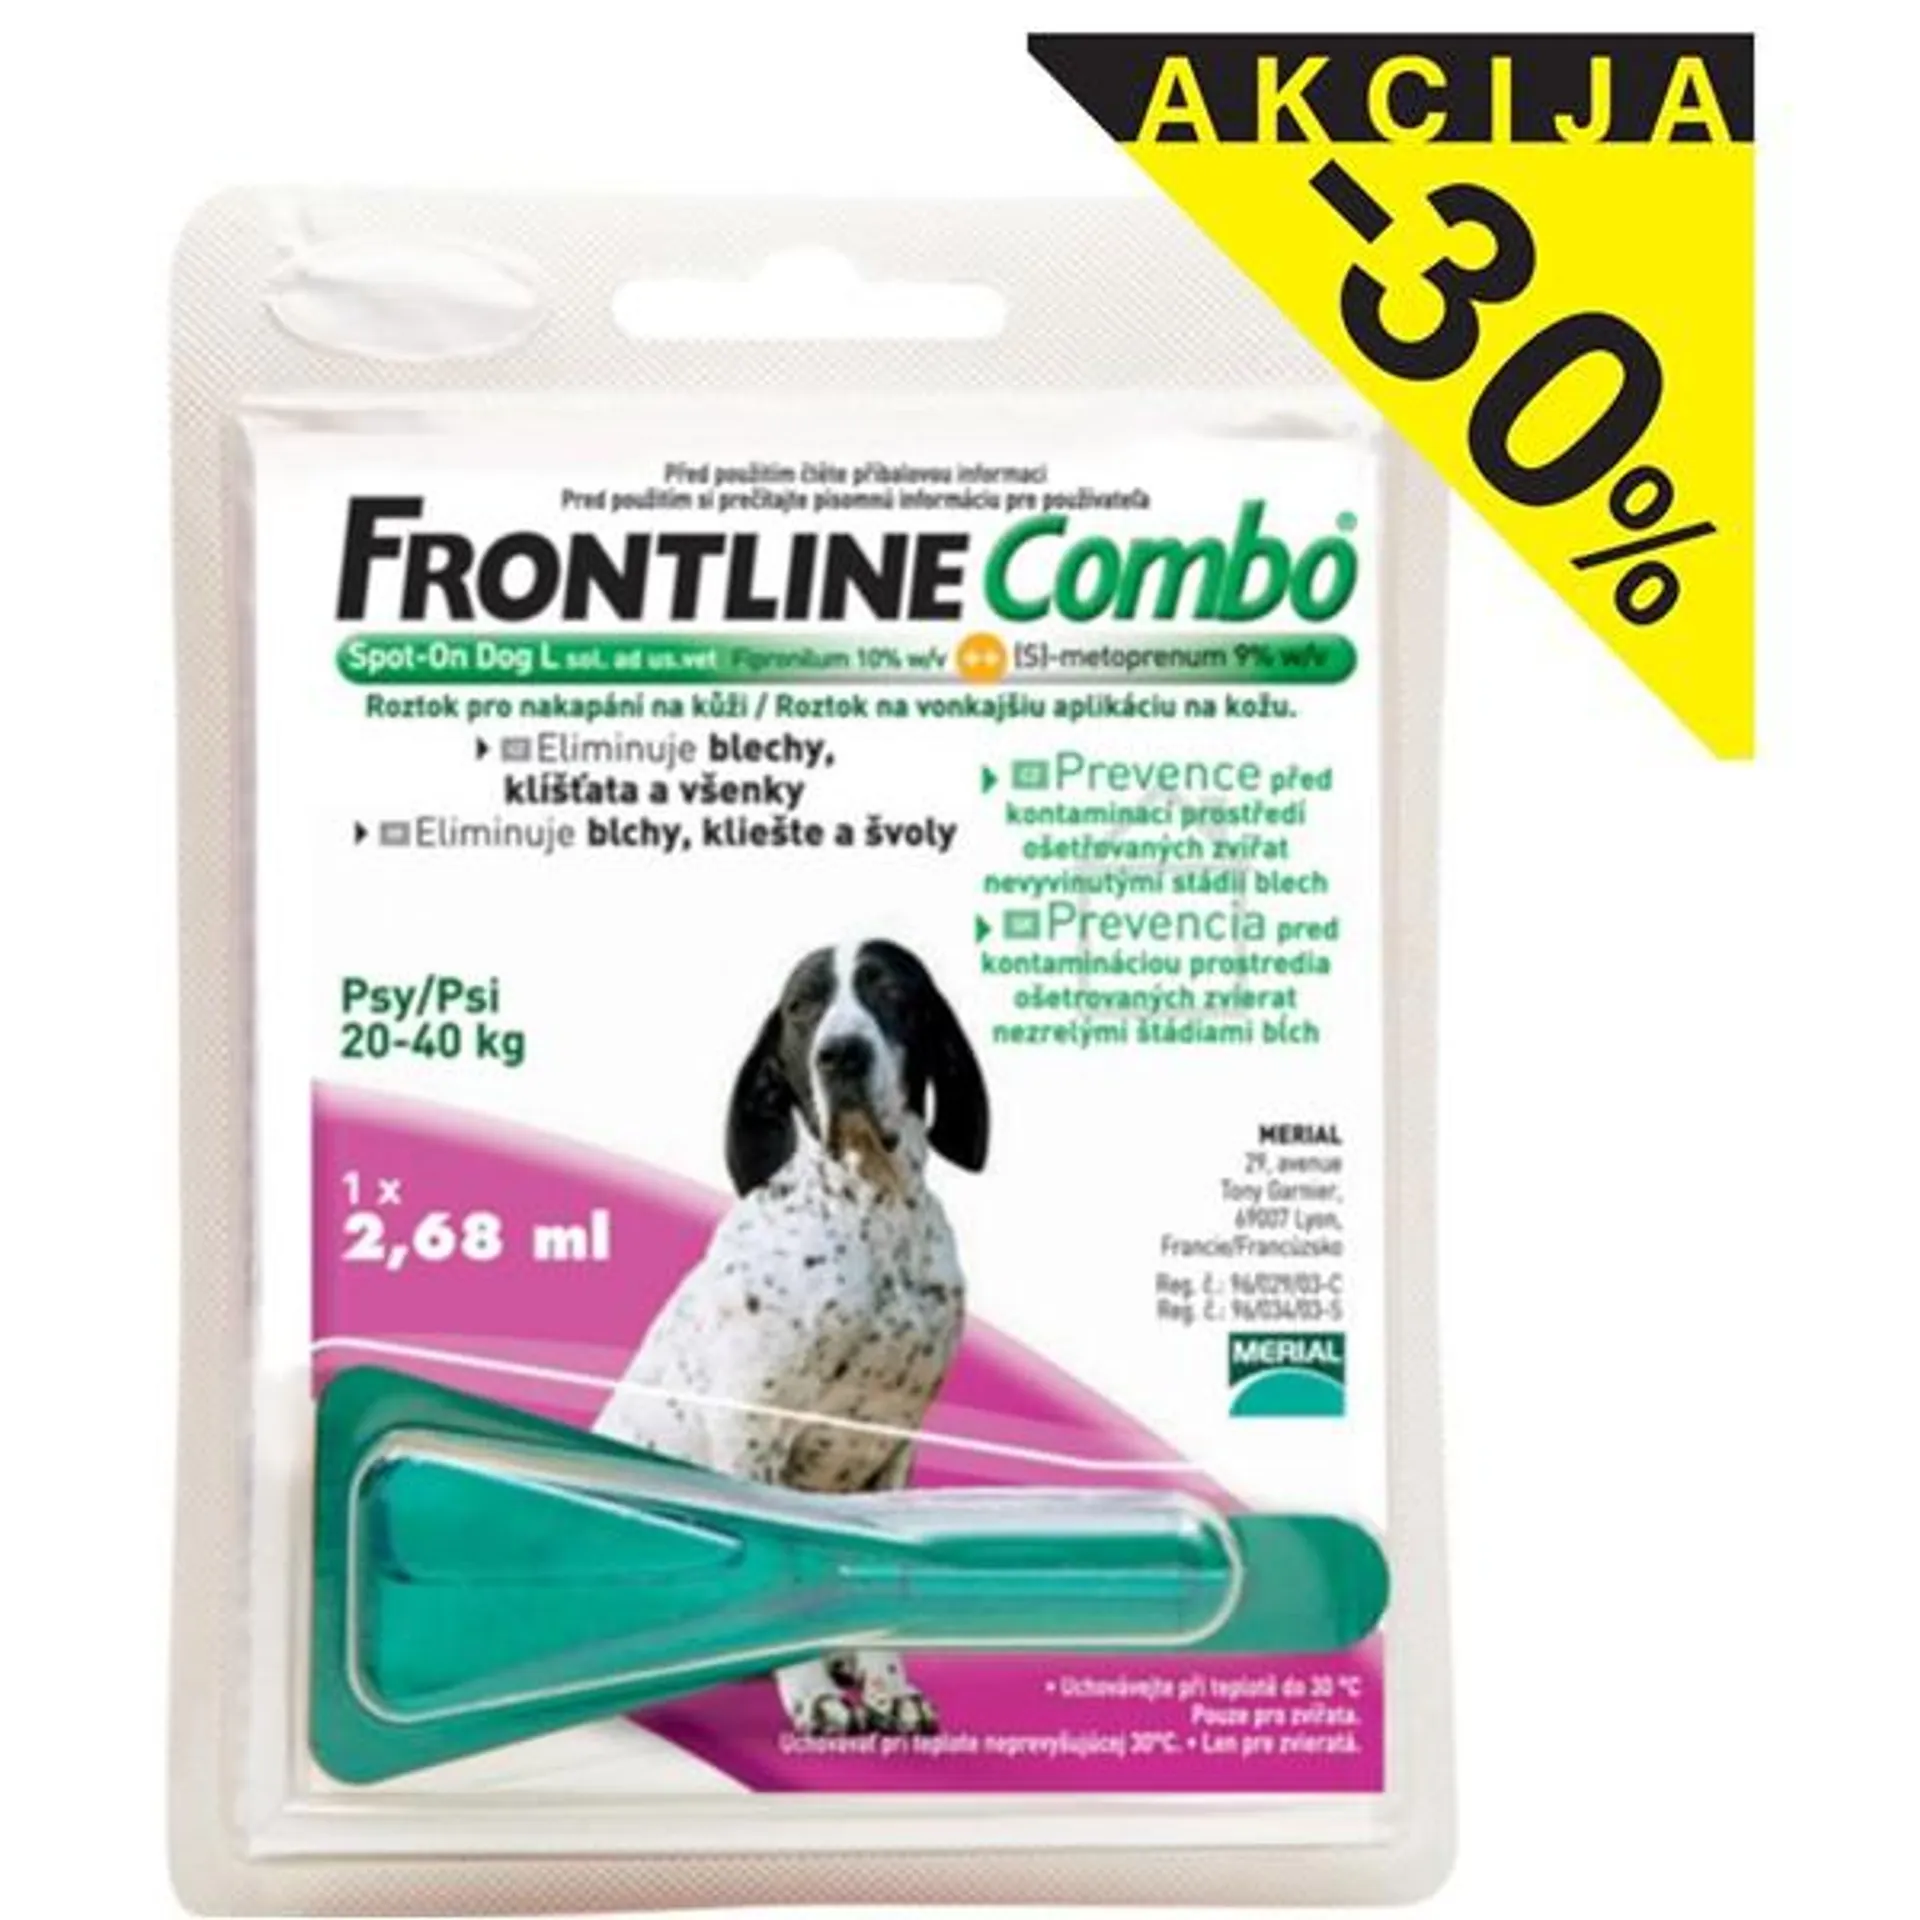 FRONTLINE® (Boehringer) Combo ampula za pse 20-40kg, 1x2,68ml, - 30%